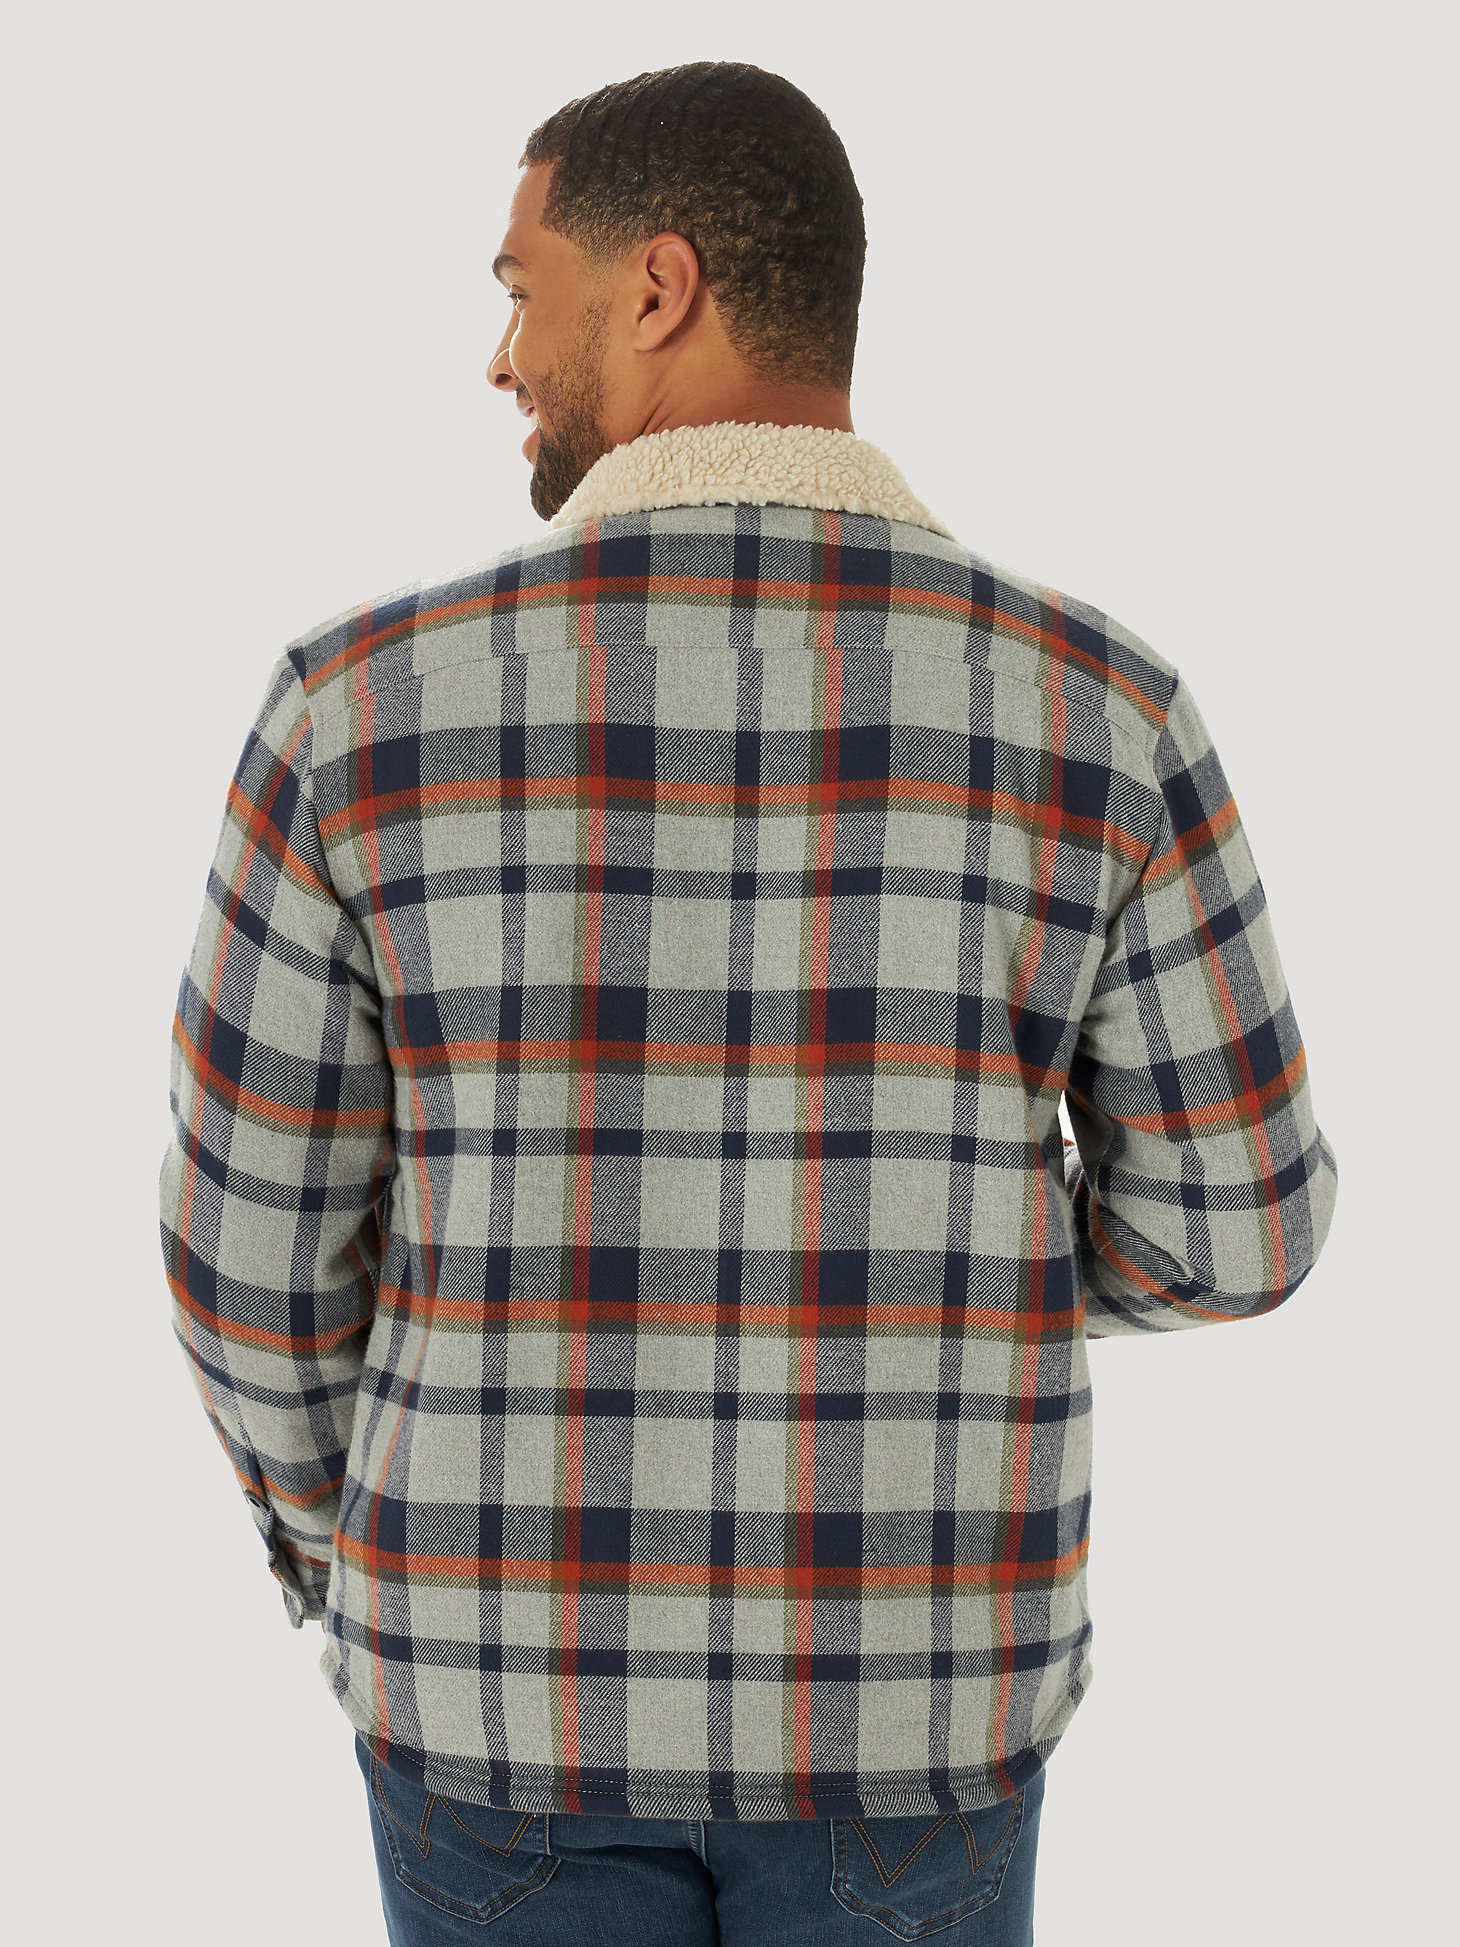 Men's Wrangler® Sherpa Collar Plaid Shirt Jacket in Grey Plaid alternative view 1